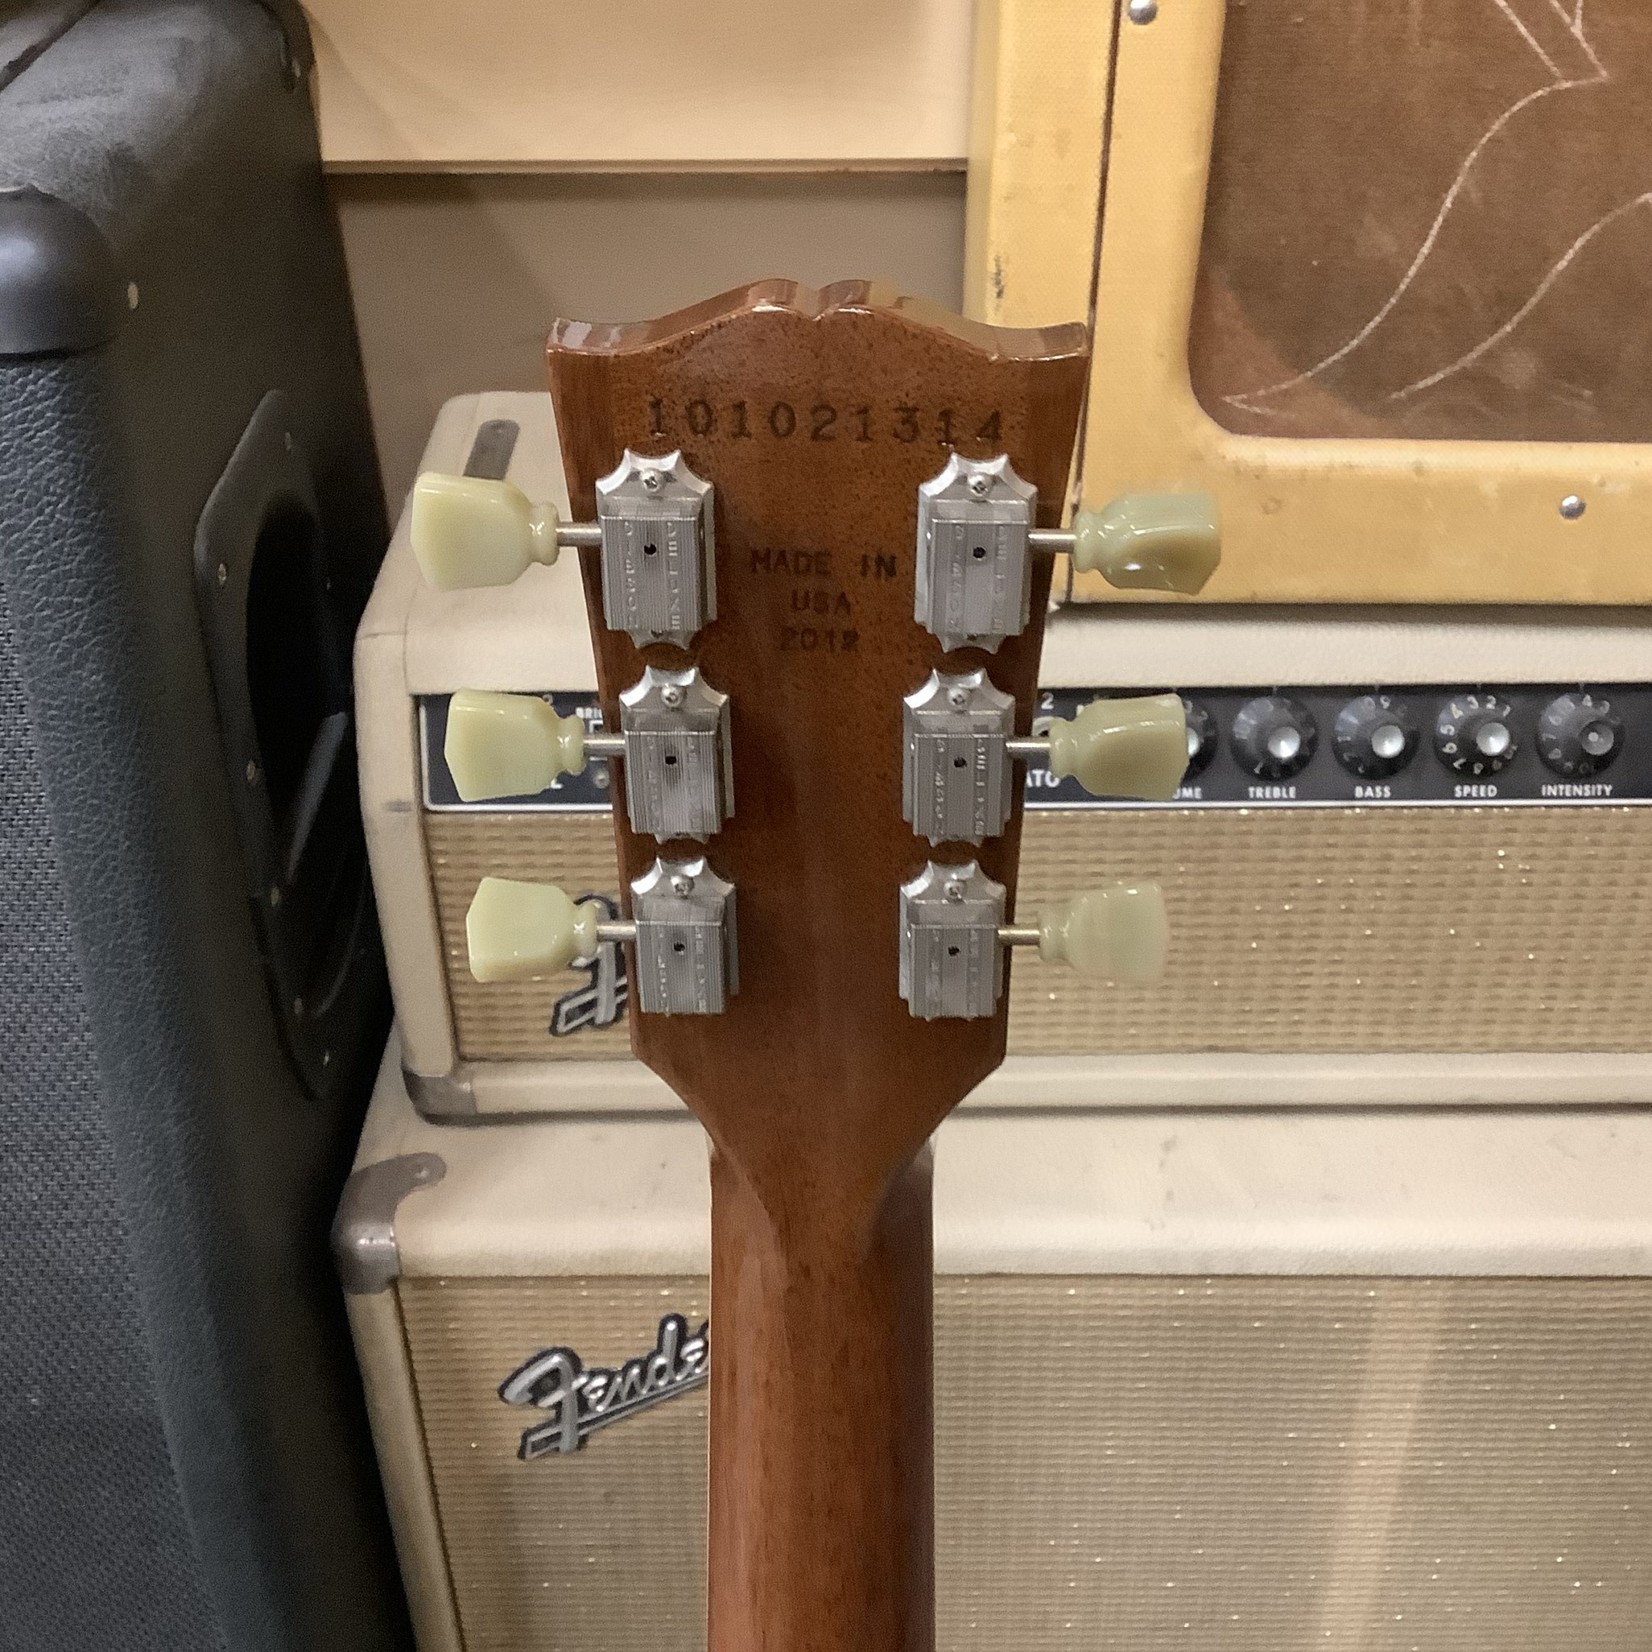 Gibson 2012 Gibson Les Paul Special Mahogany